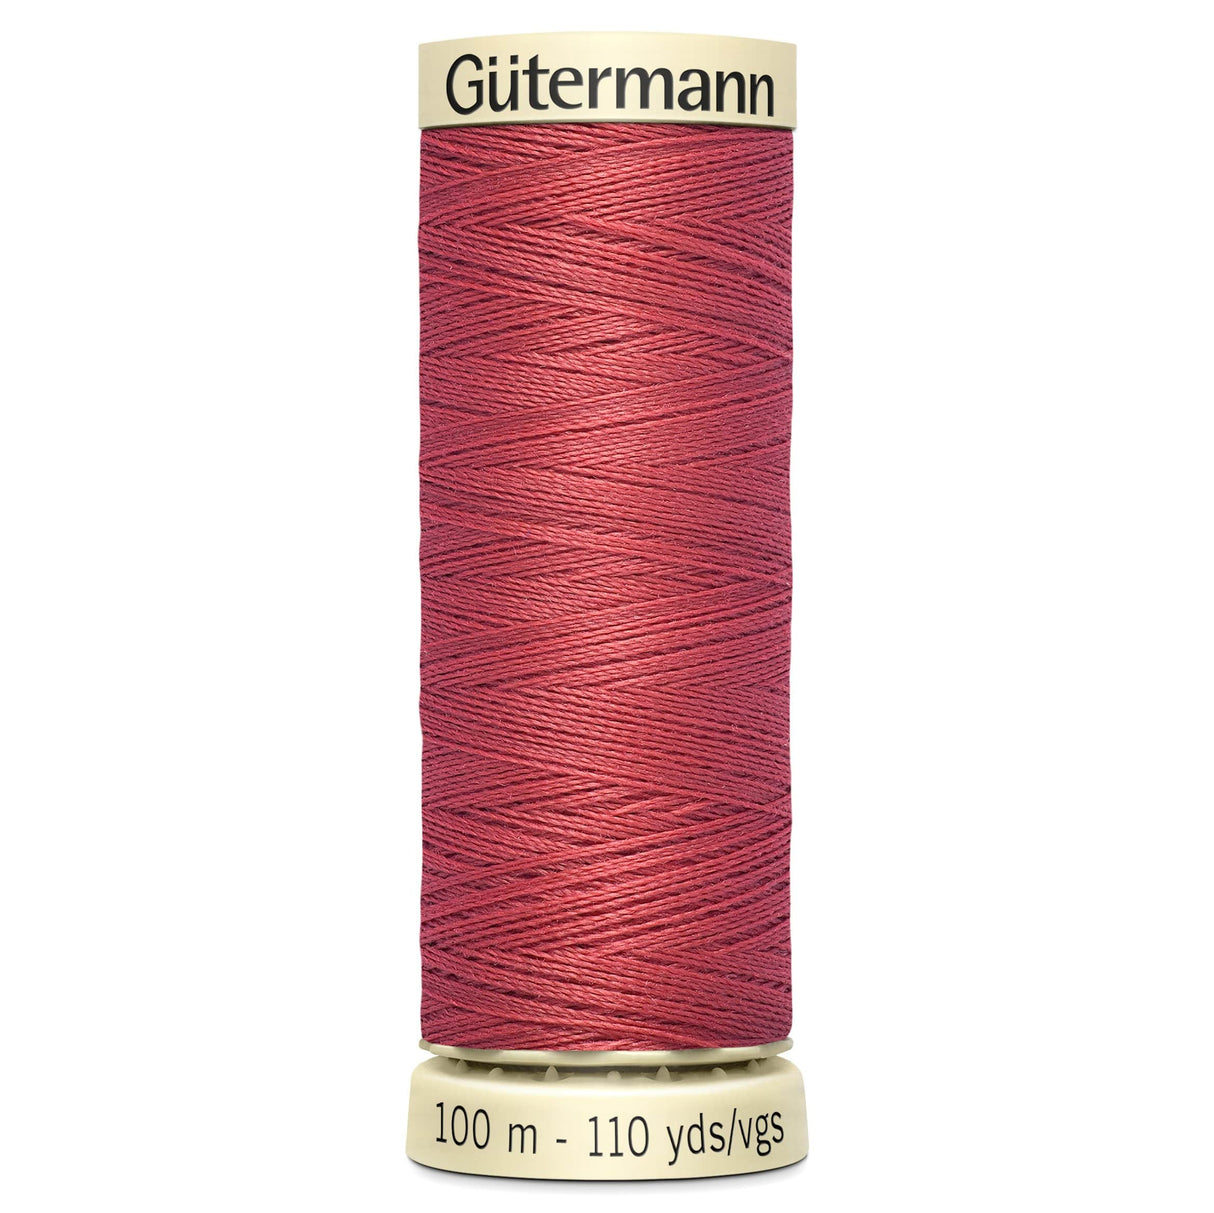 Groves Haberdashery 519 Gutermann Thread Sewing Cotton 100 m Black to Pink